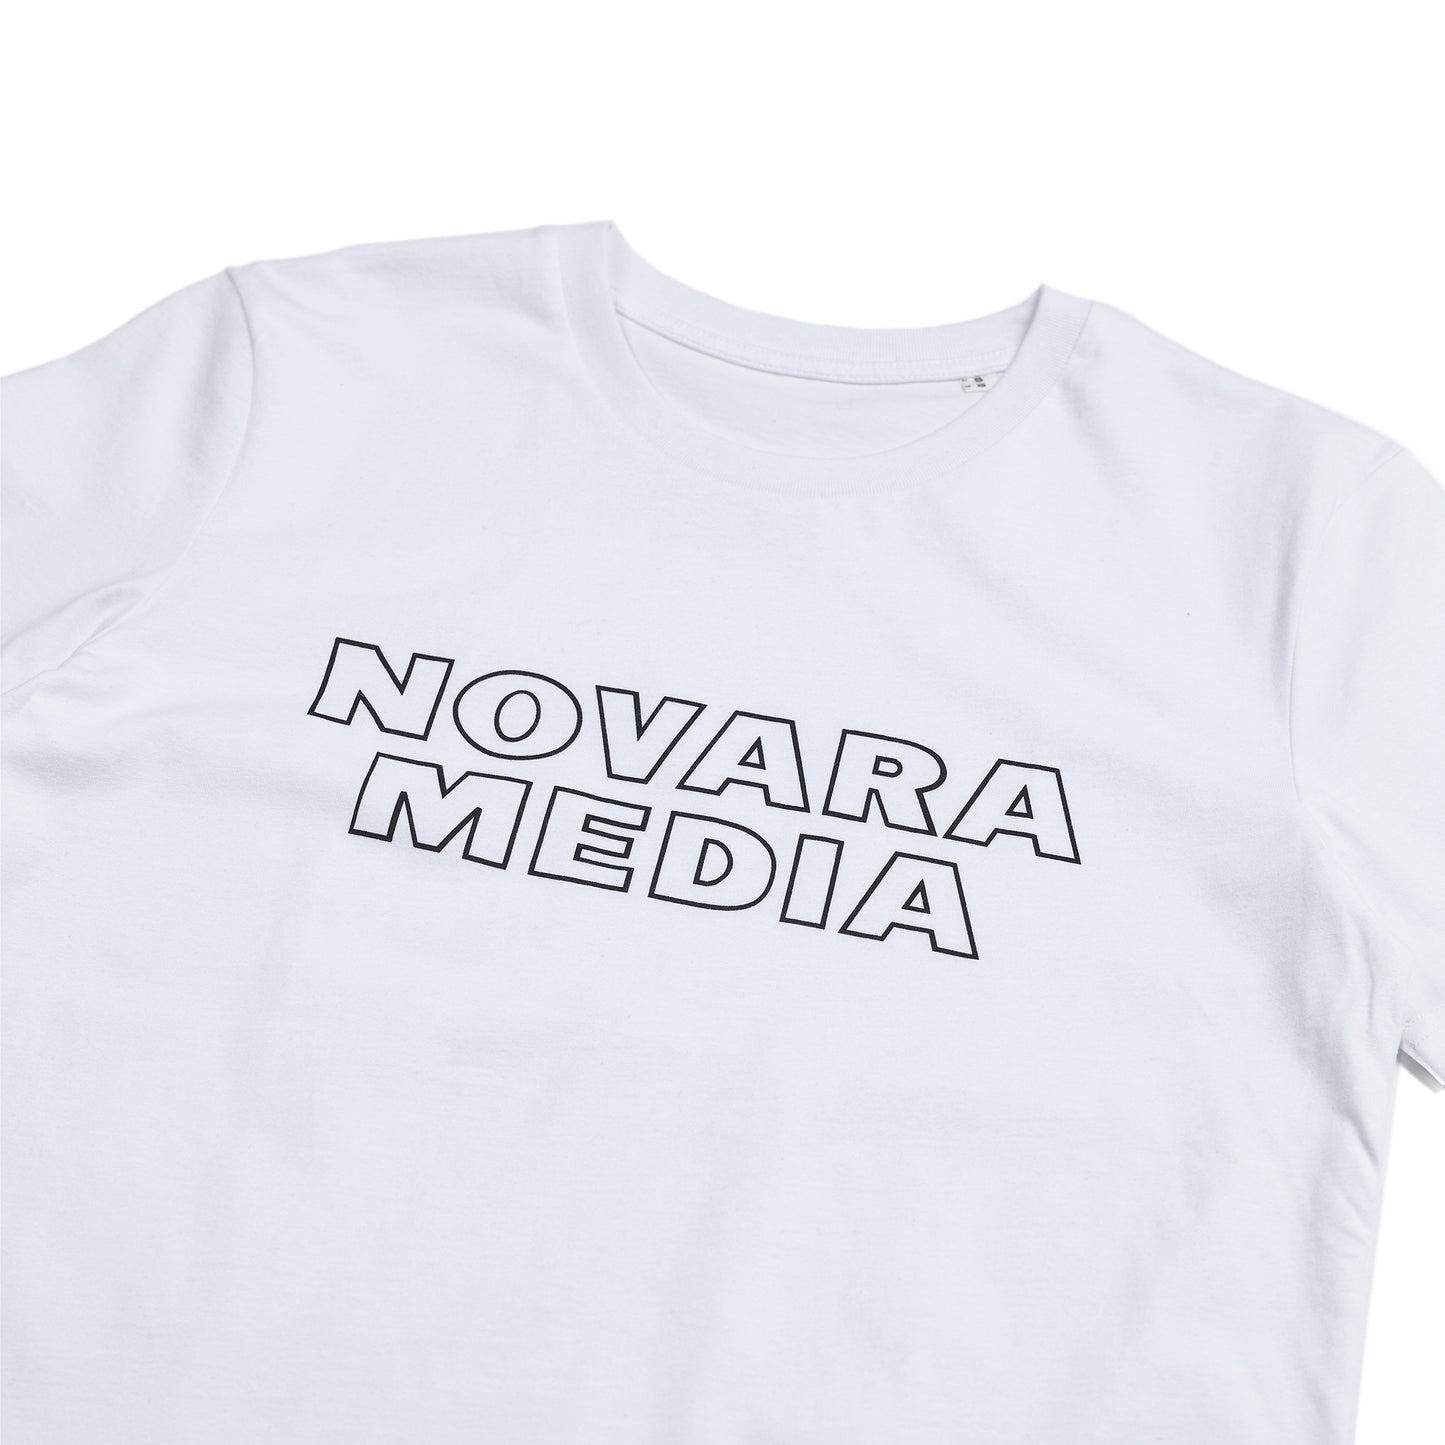 Novara Media Short Sleeve White